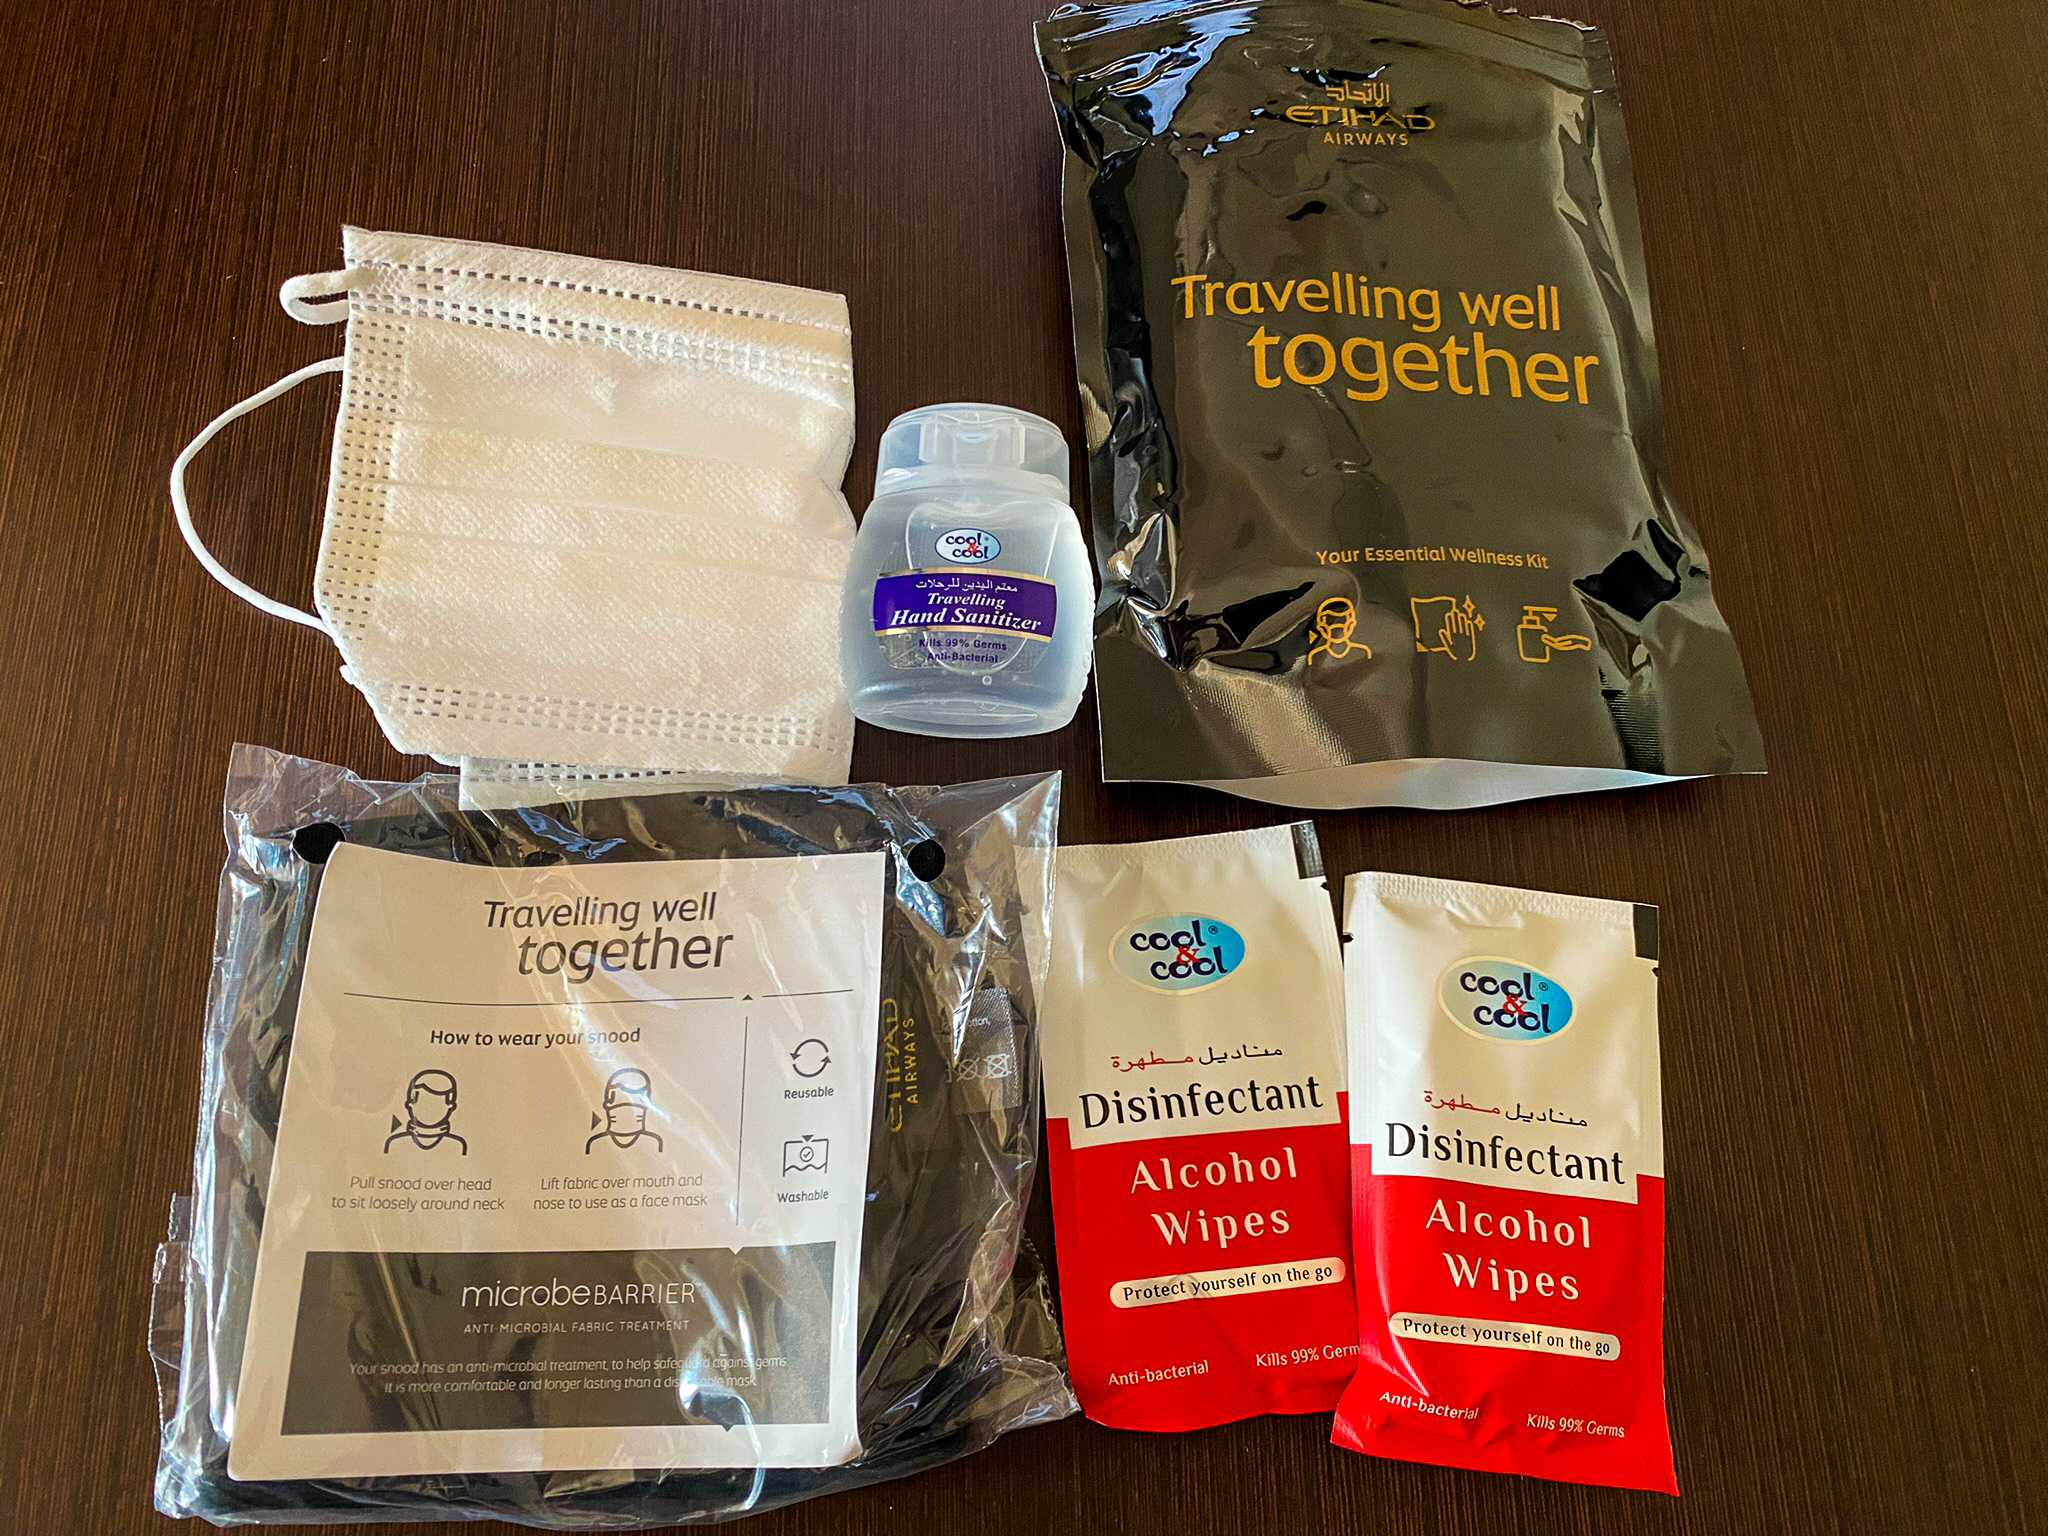 Etihad first class hygiene kit contents